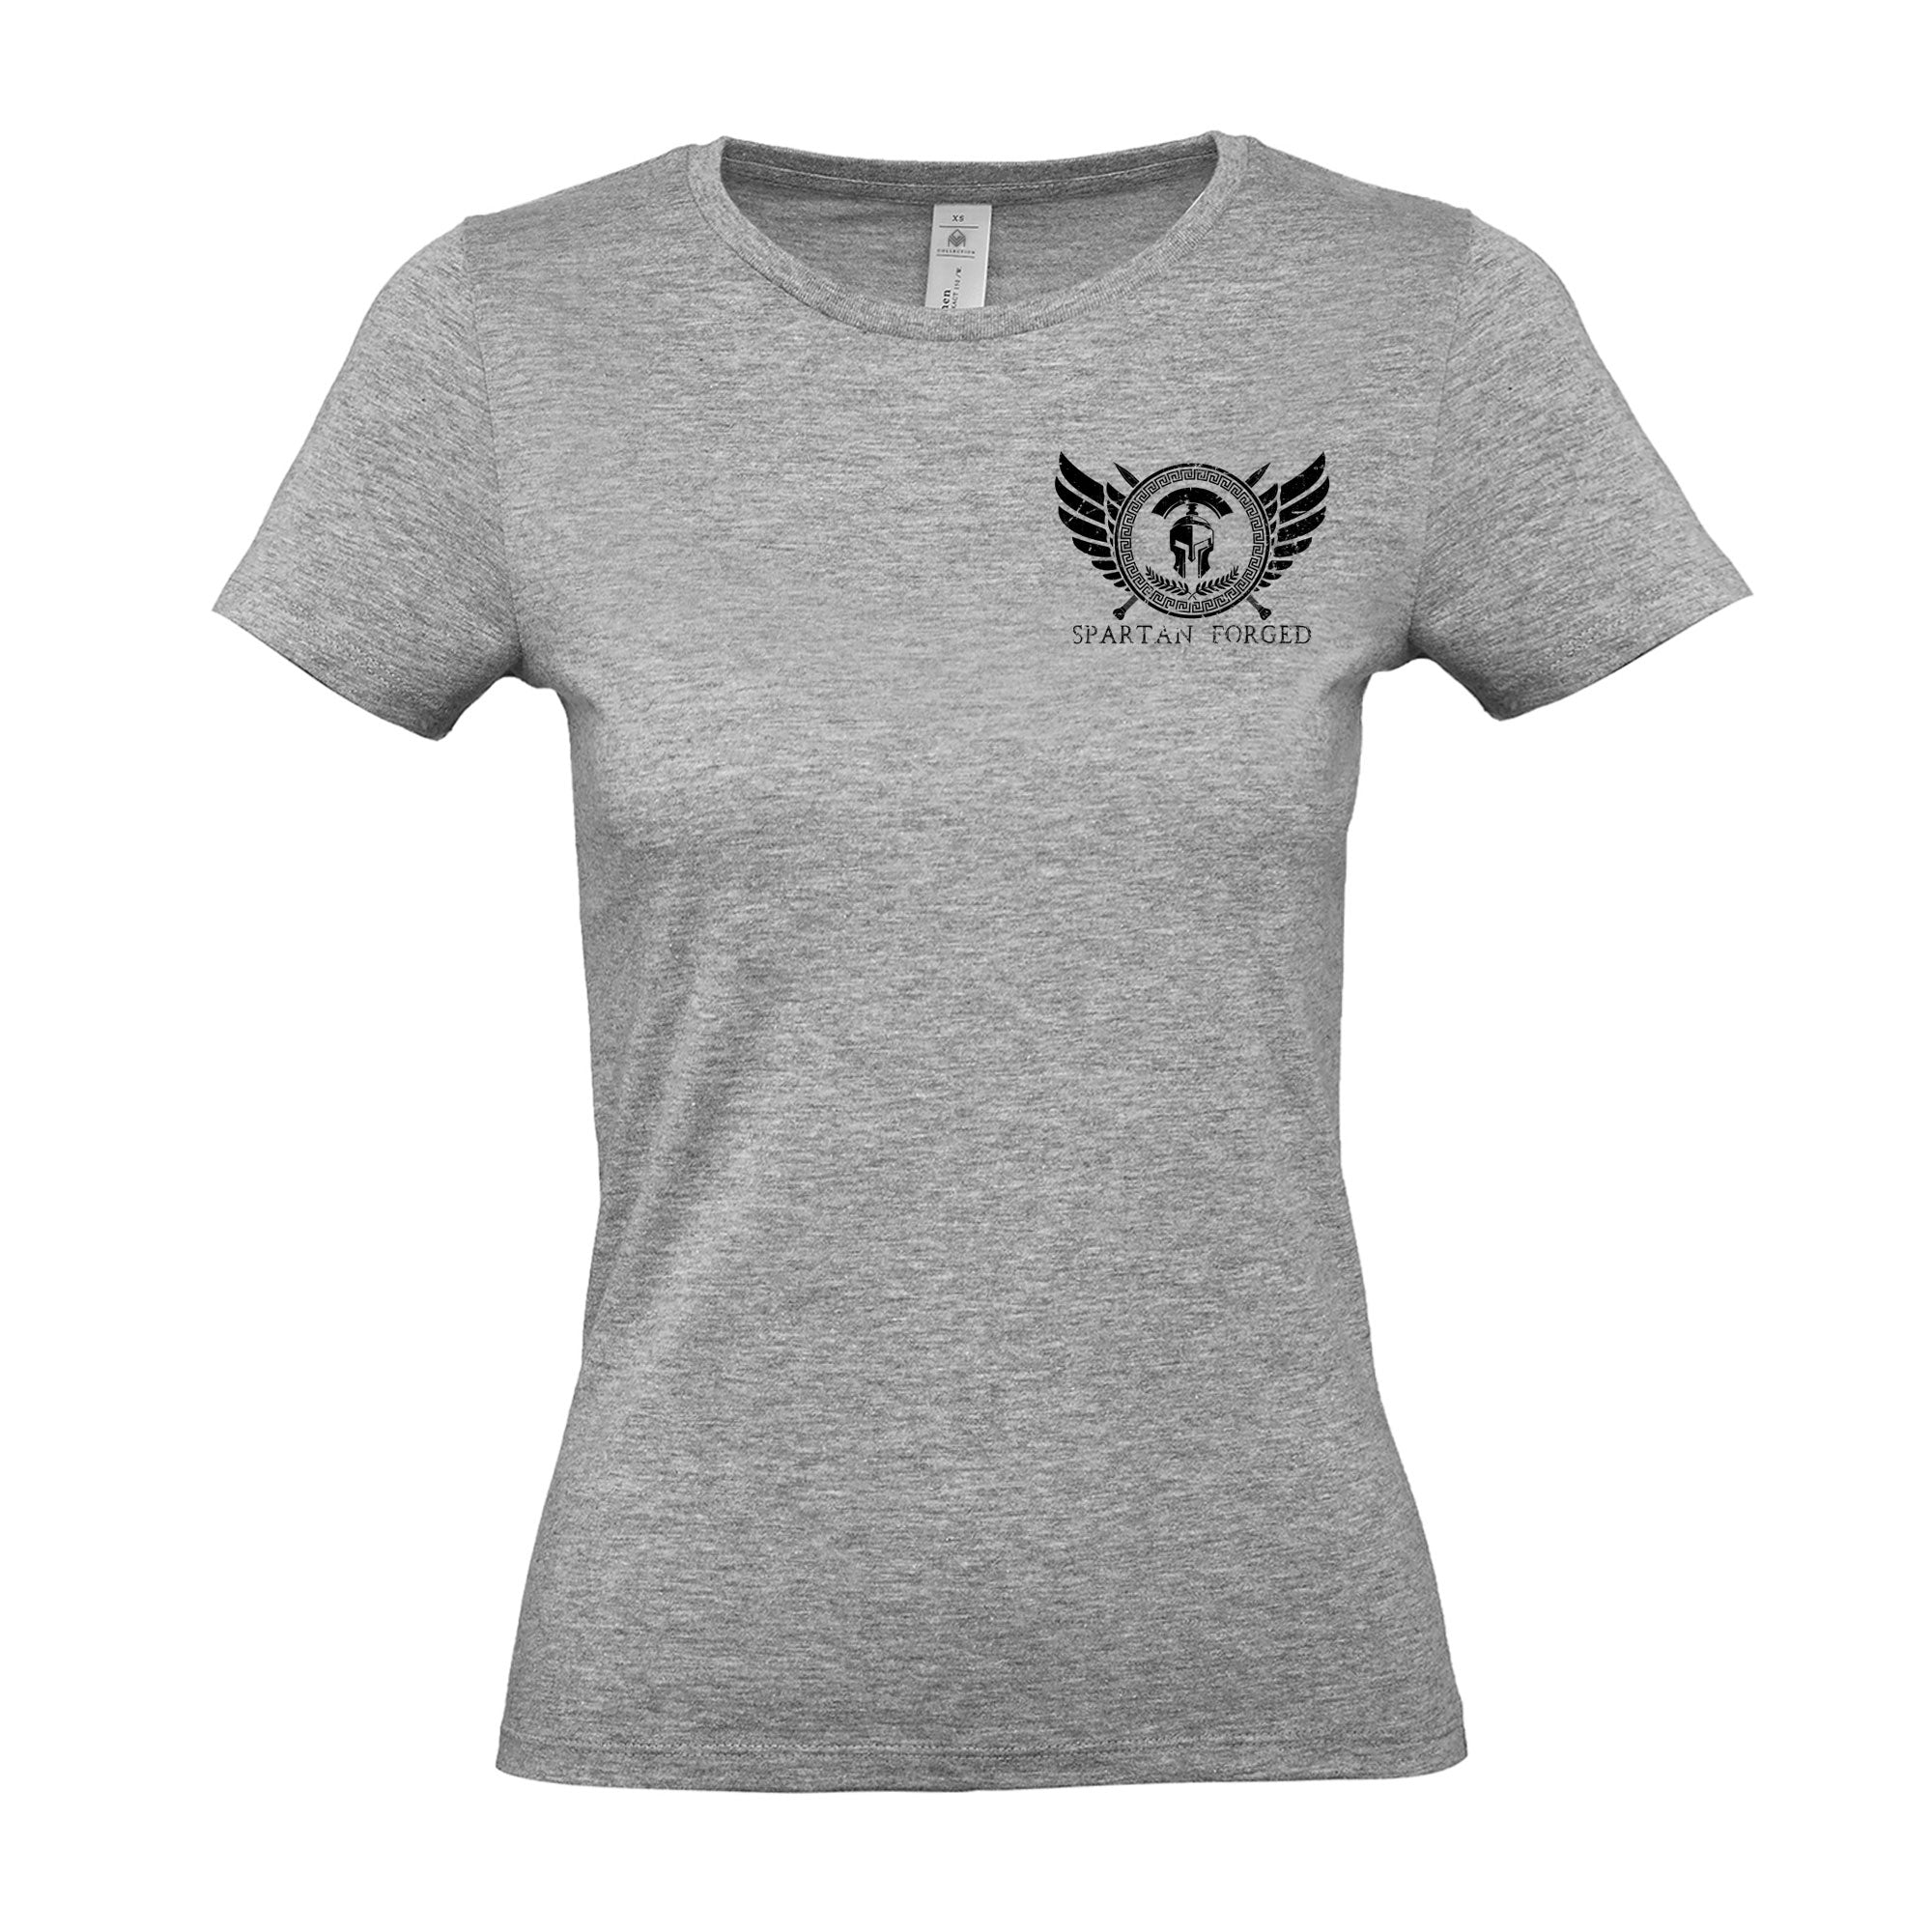 Spartan Forged Logo - Women's Gym T-Shirt